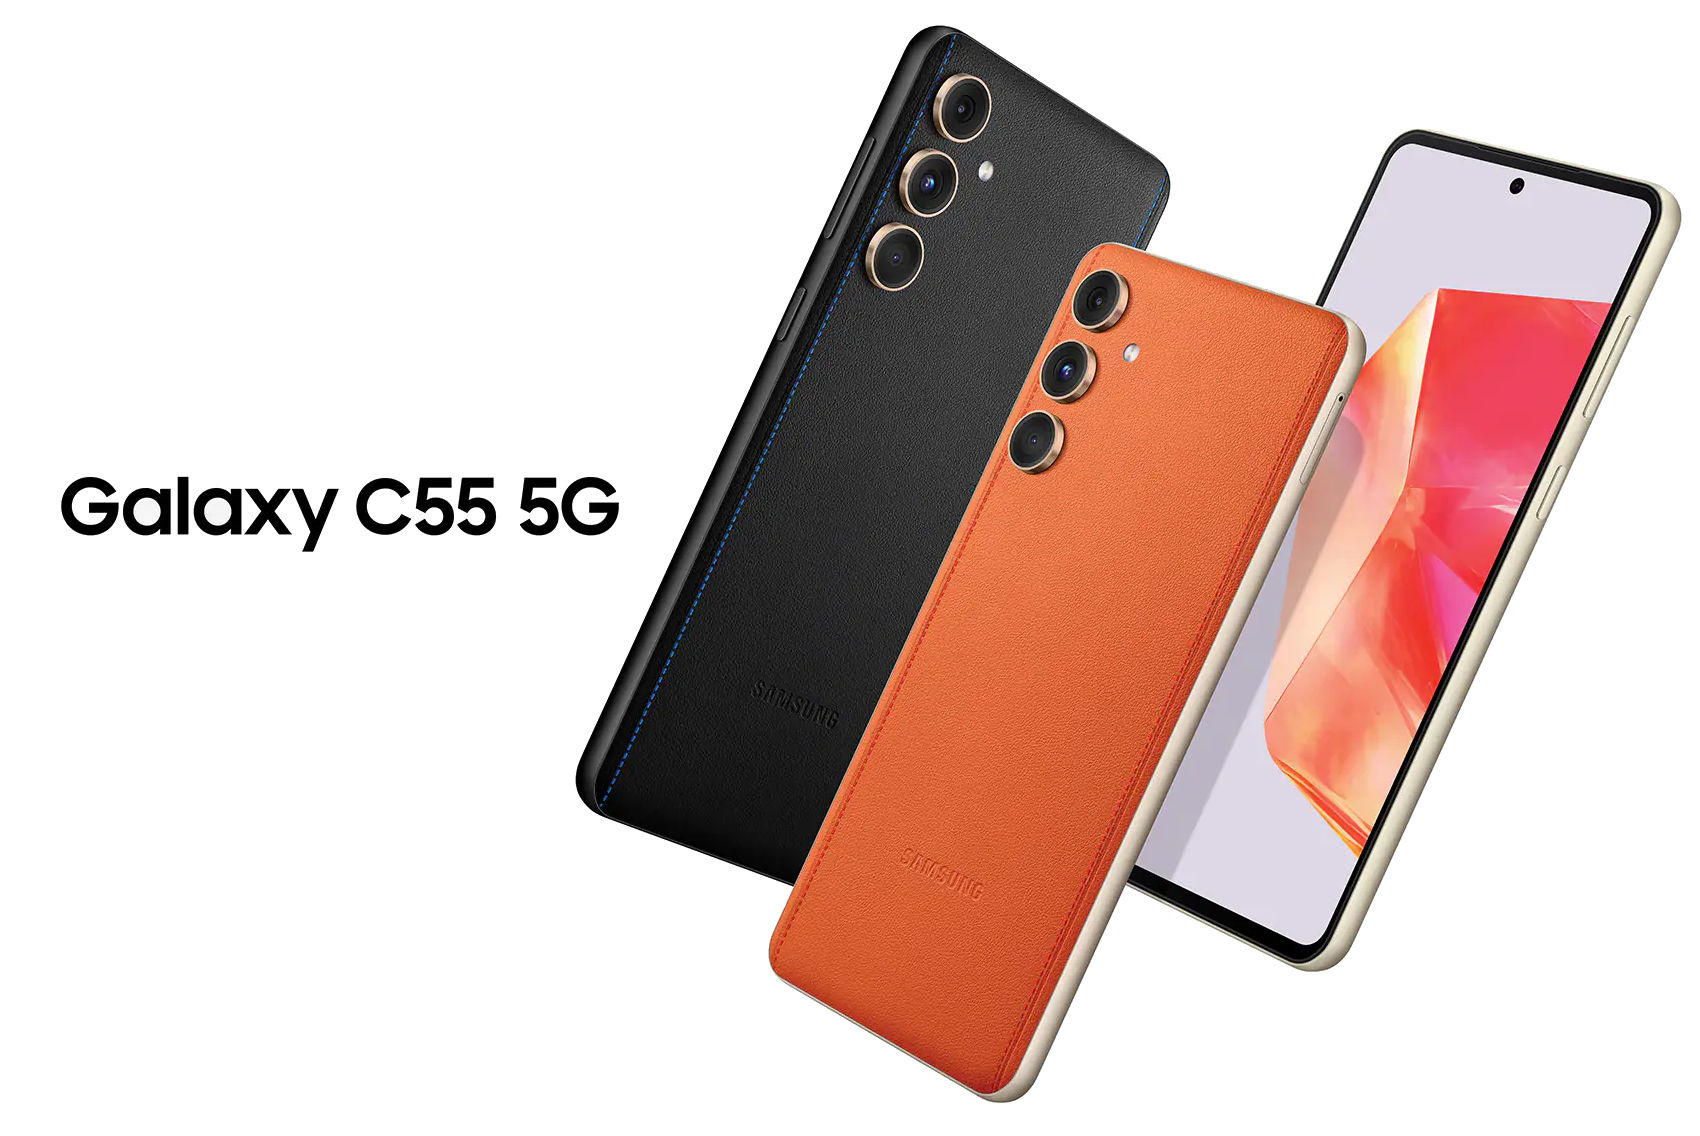 Samsung Galaxy C55 announced